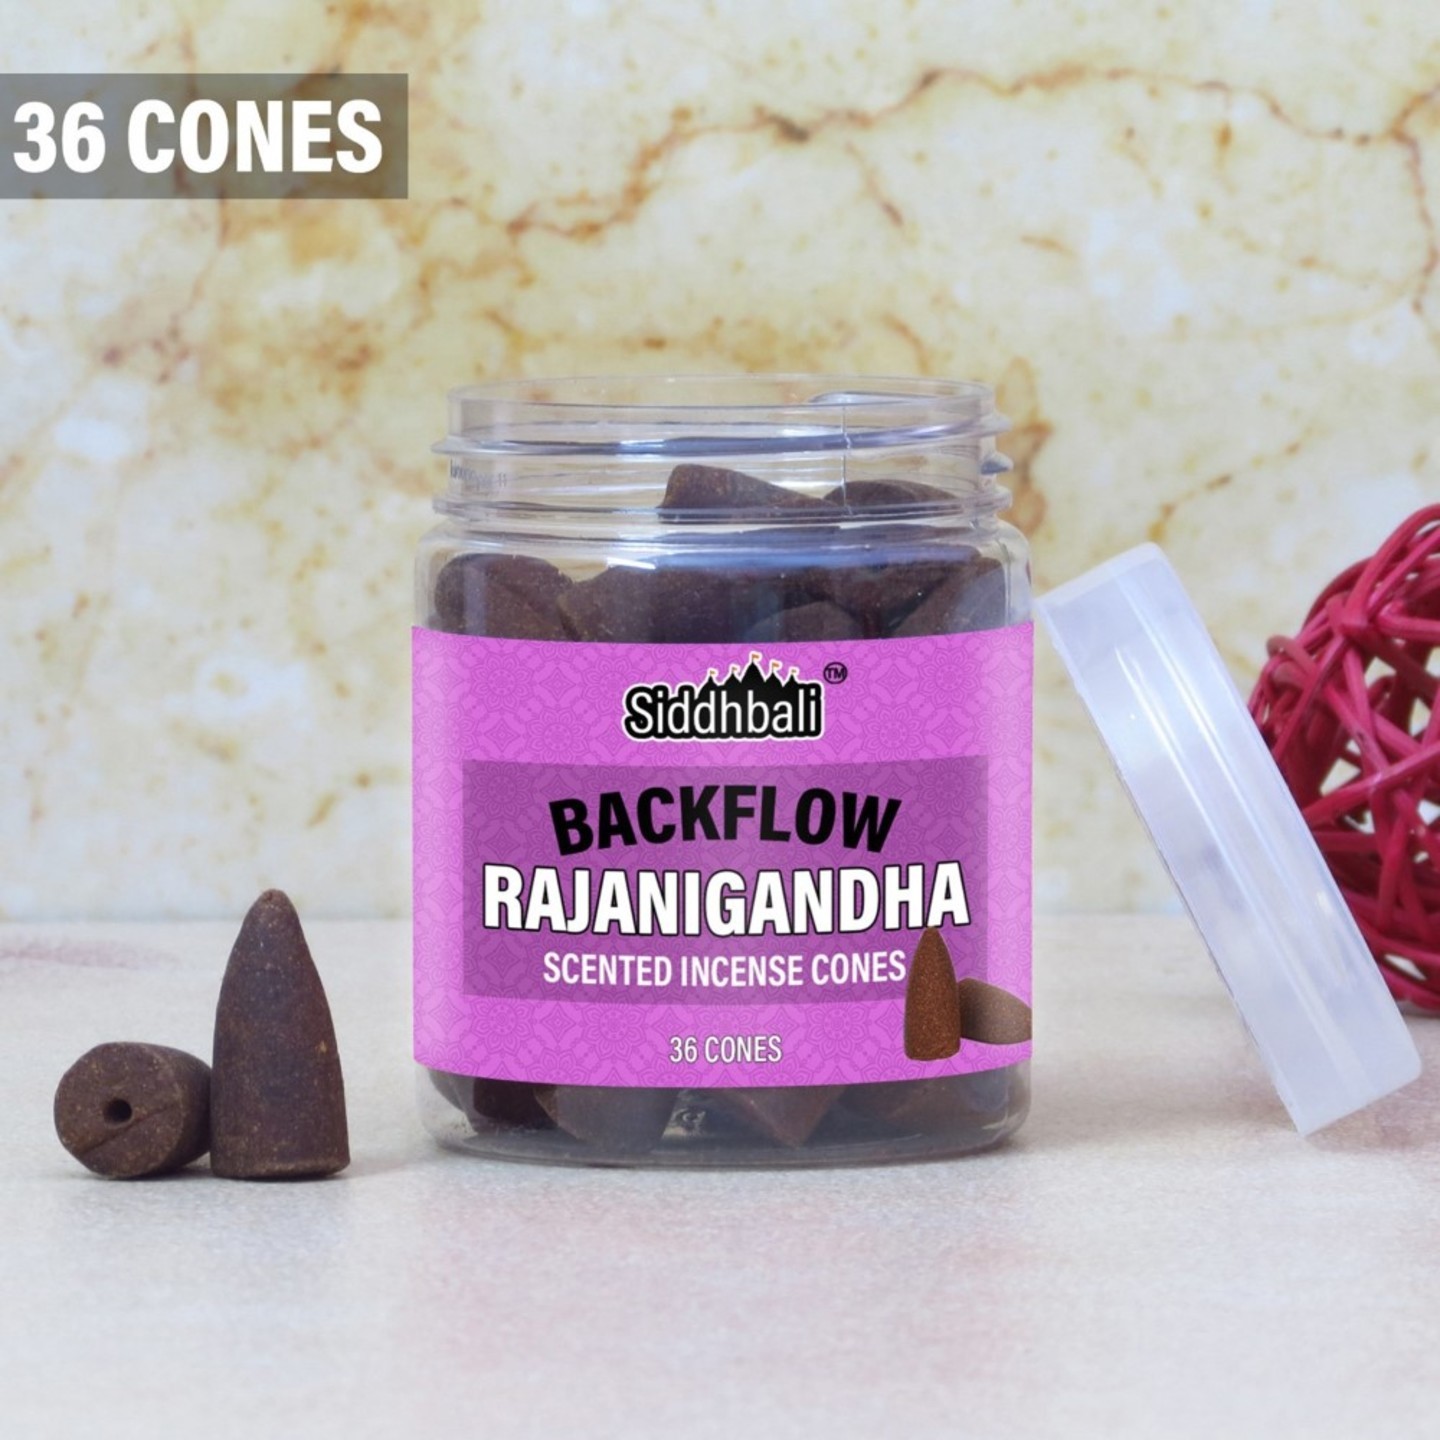 Rajanigandha Backflow Cones